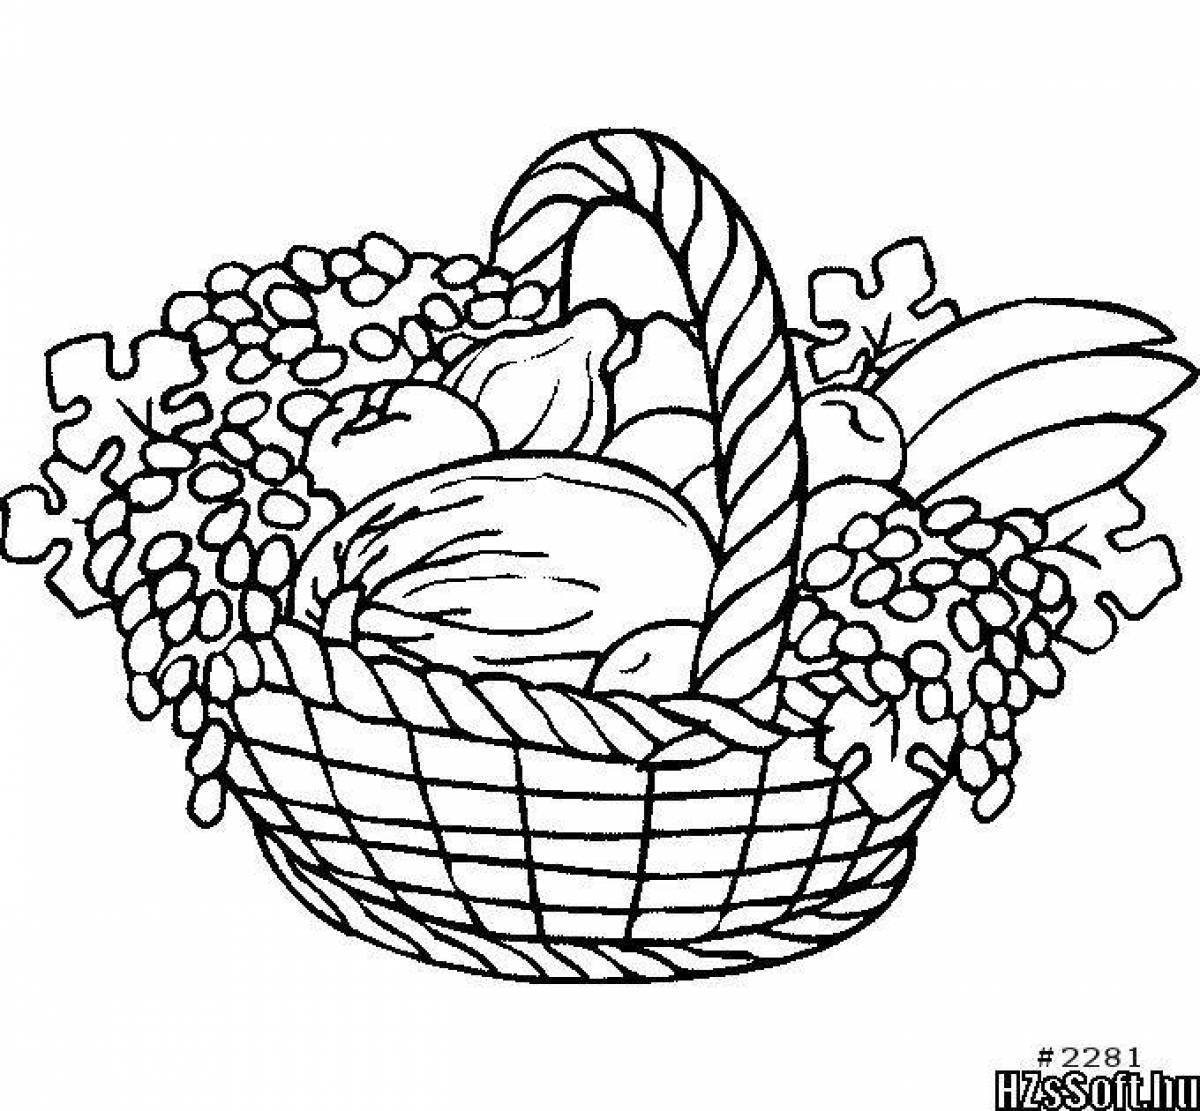 Coloring page living food basket